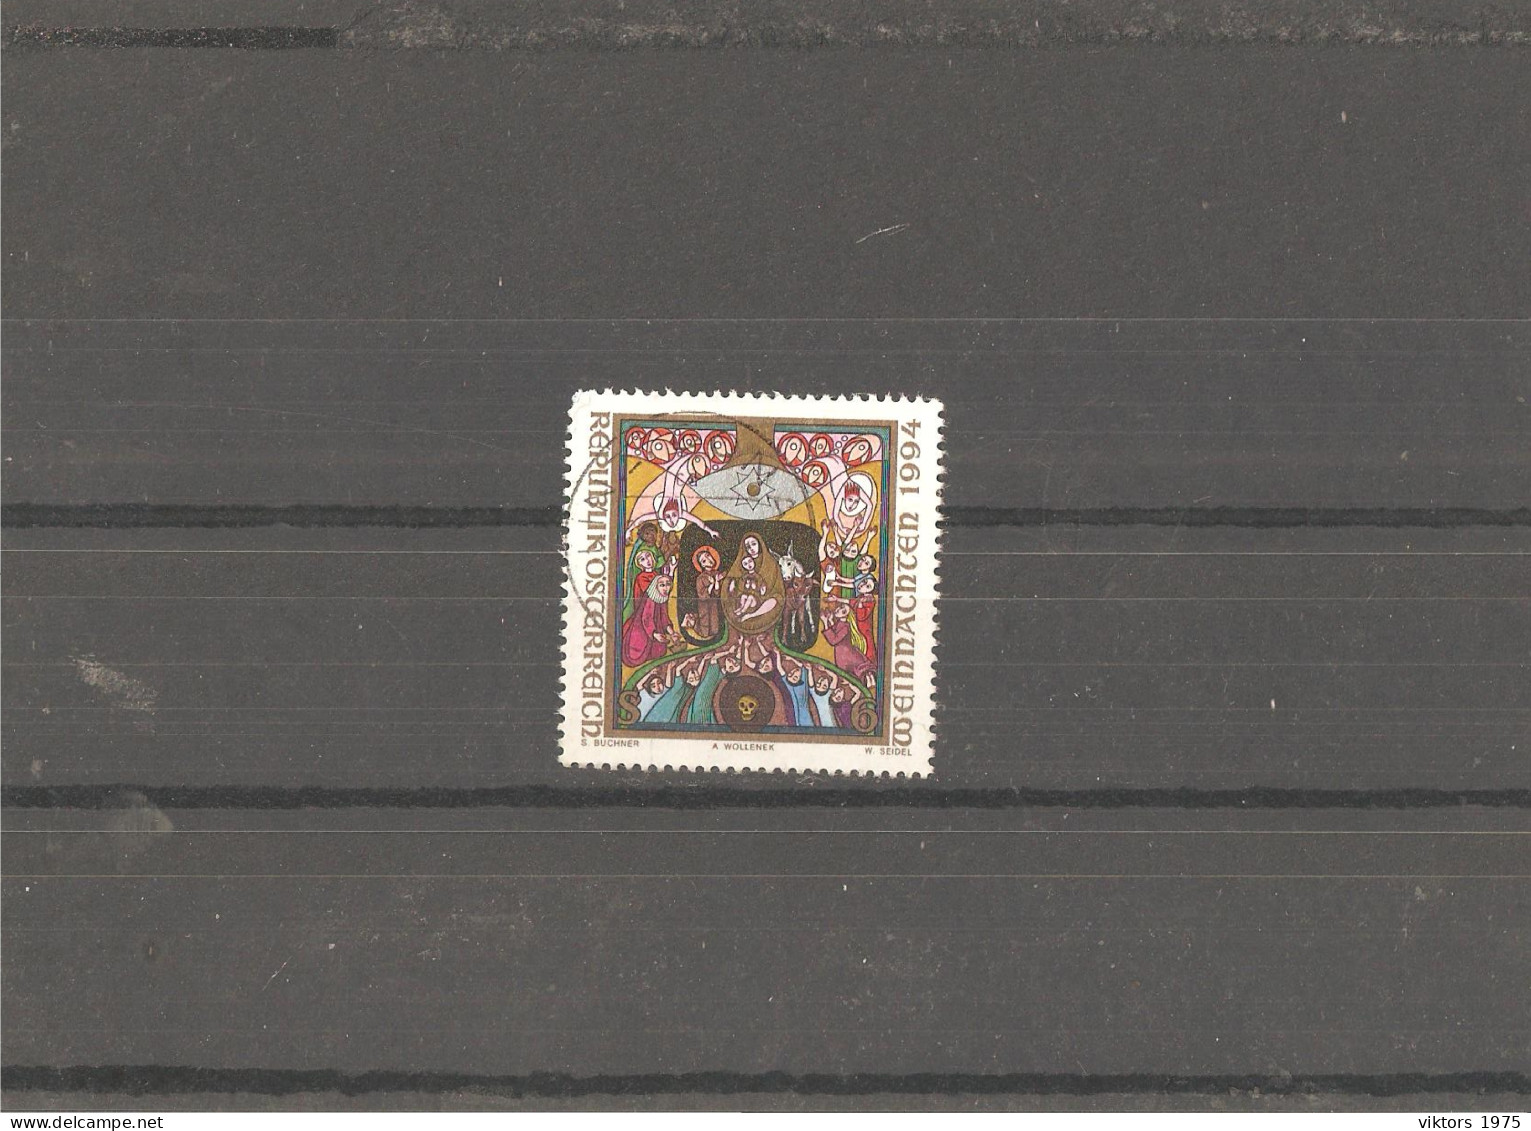 Used Stamp Nr.2144 In MICHEL Catalog - Gebraucht